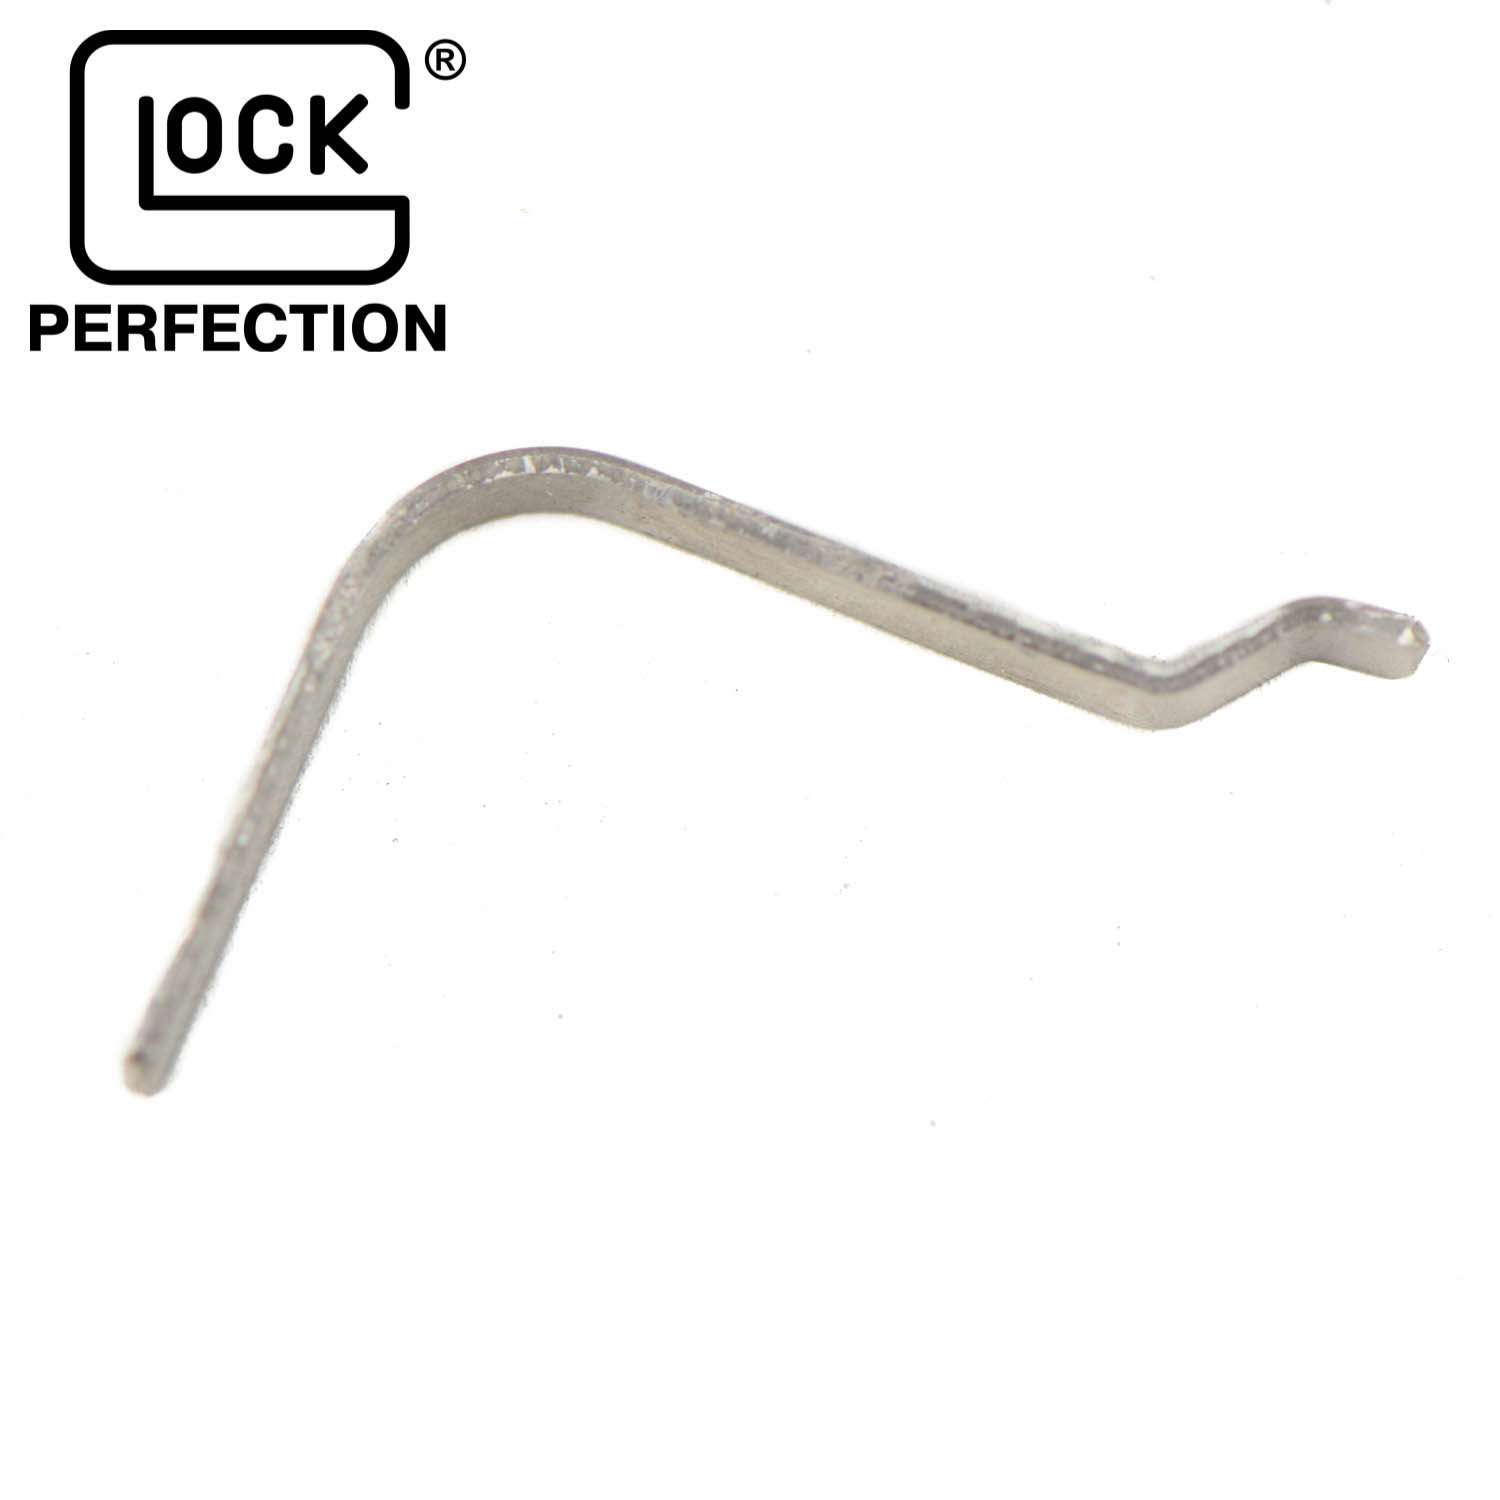 Action Parts Glock 17 19 22-24 26 27 31-35 Slide Lock New Factory OEM Part 